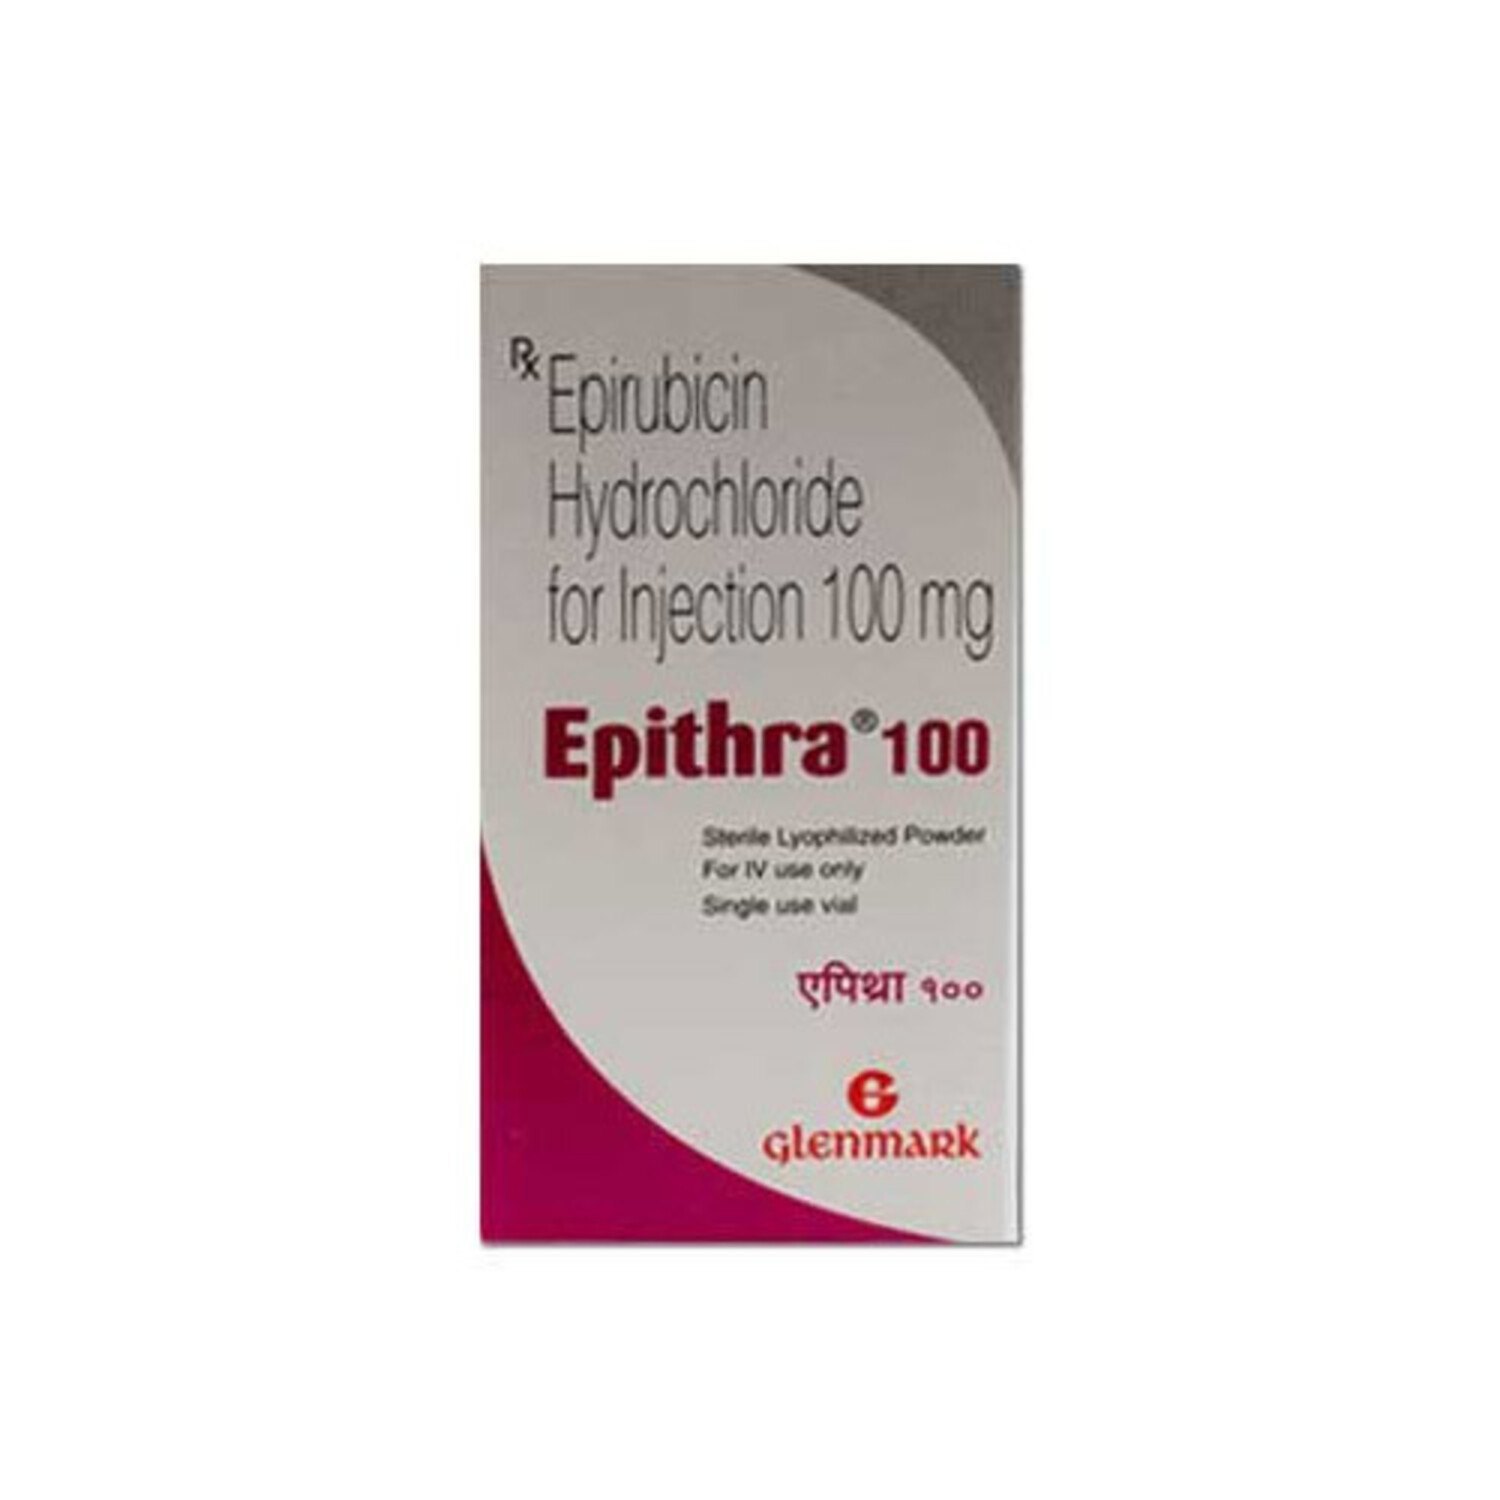 Epithra 100 Mg Injection | Epirubicin | Epithra | It's Side Effects